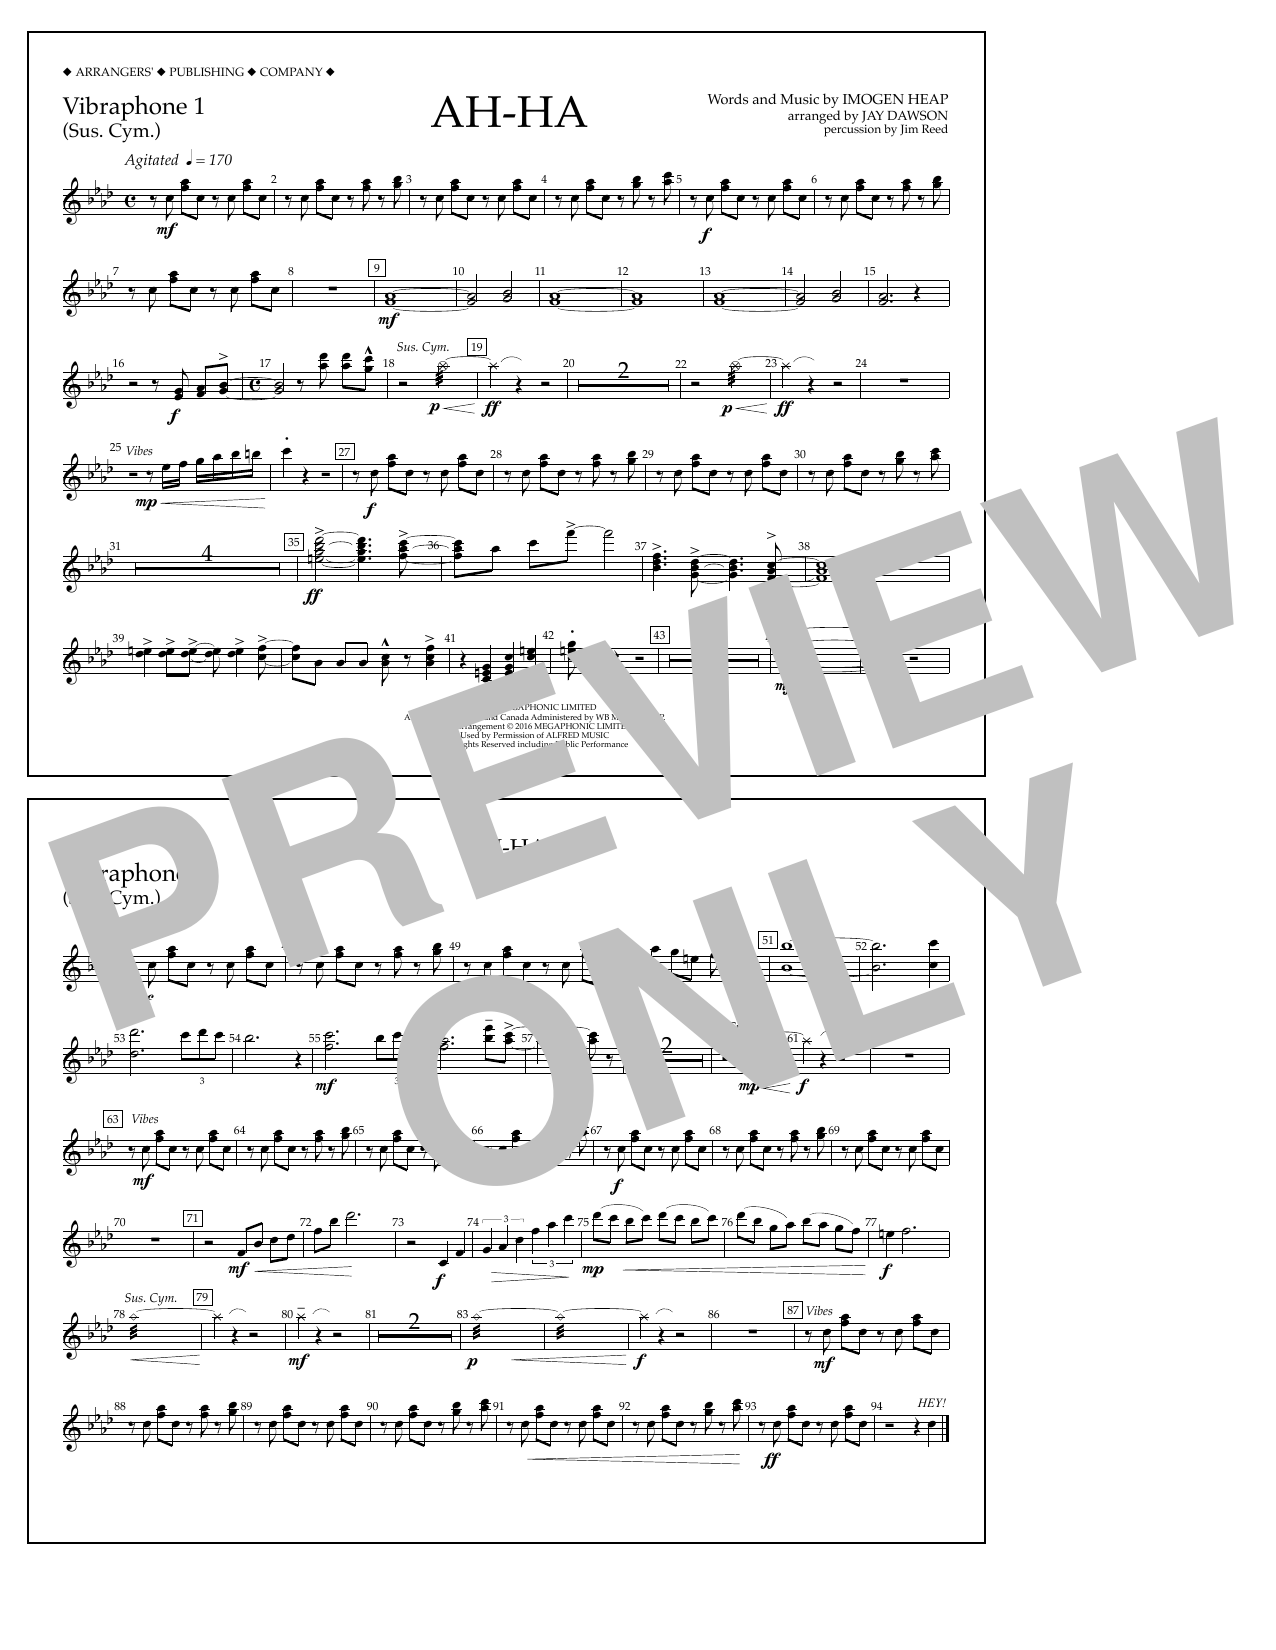 Jay Dawson Ah-ha - Vibraphone 1 Sheet Music Notes & Chords for Marching Band - Download or Print PDF